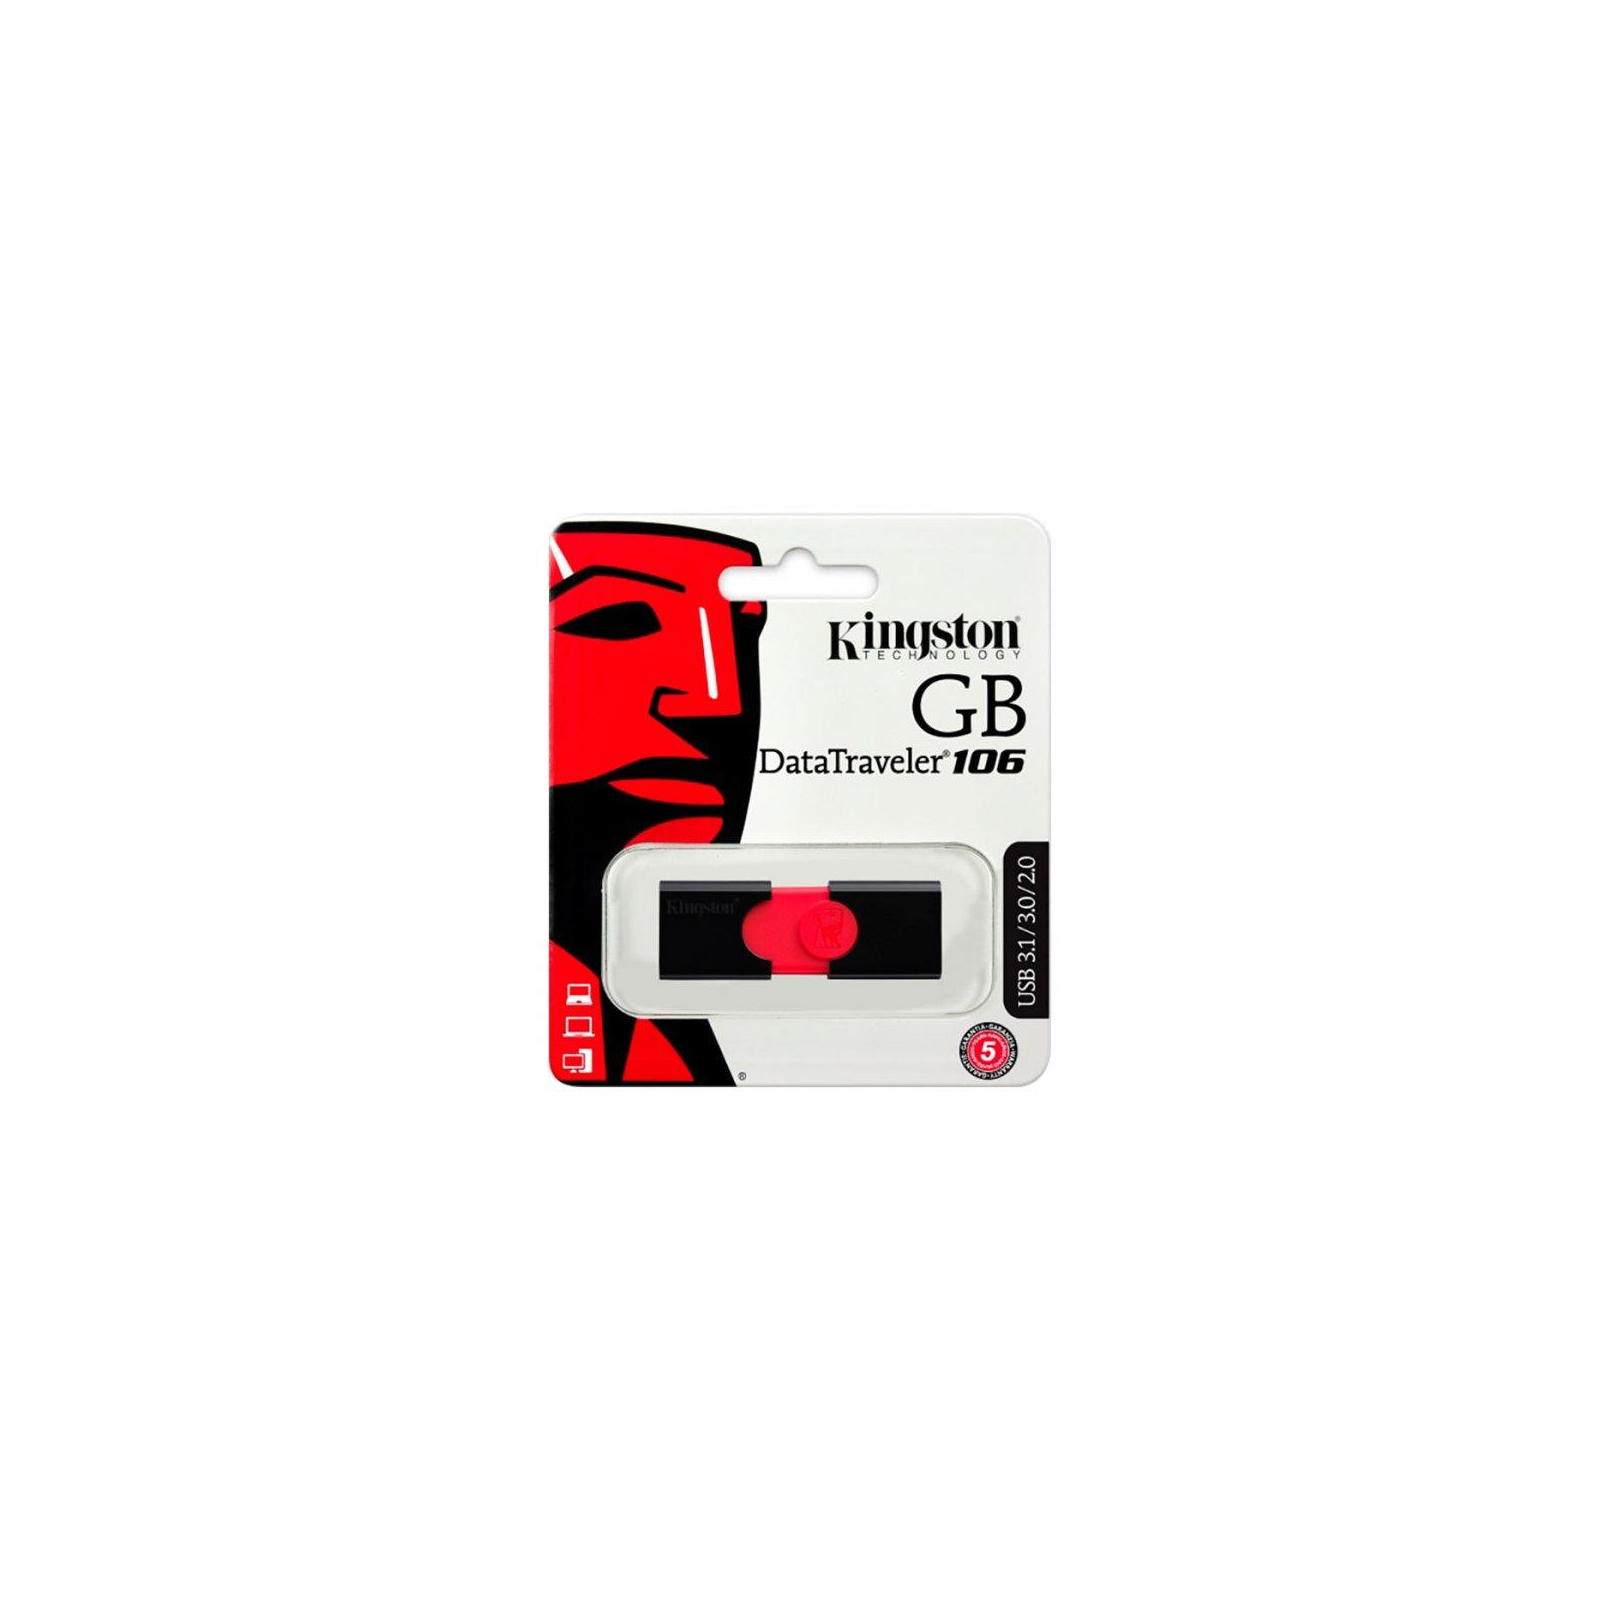 USB флеш накопитель Kingston 32GB DT106 USB 3.0 (DT106/32GB) изображение 5